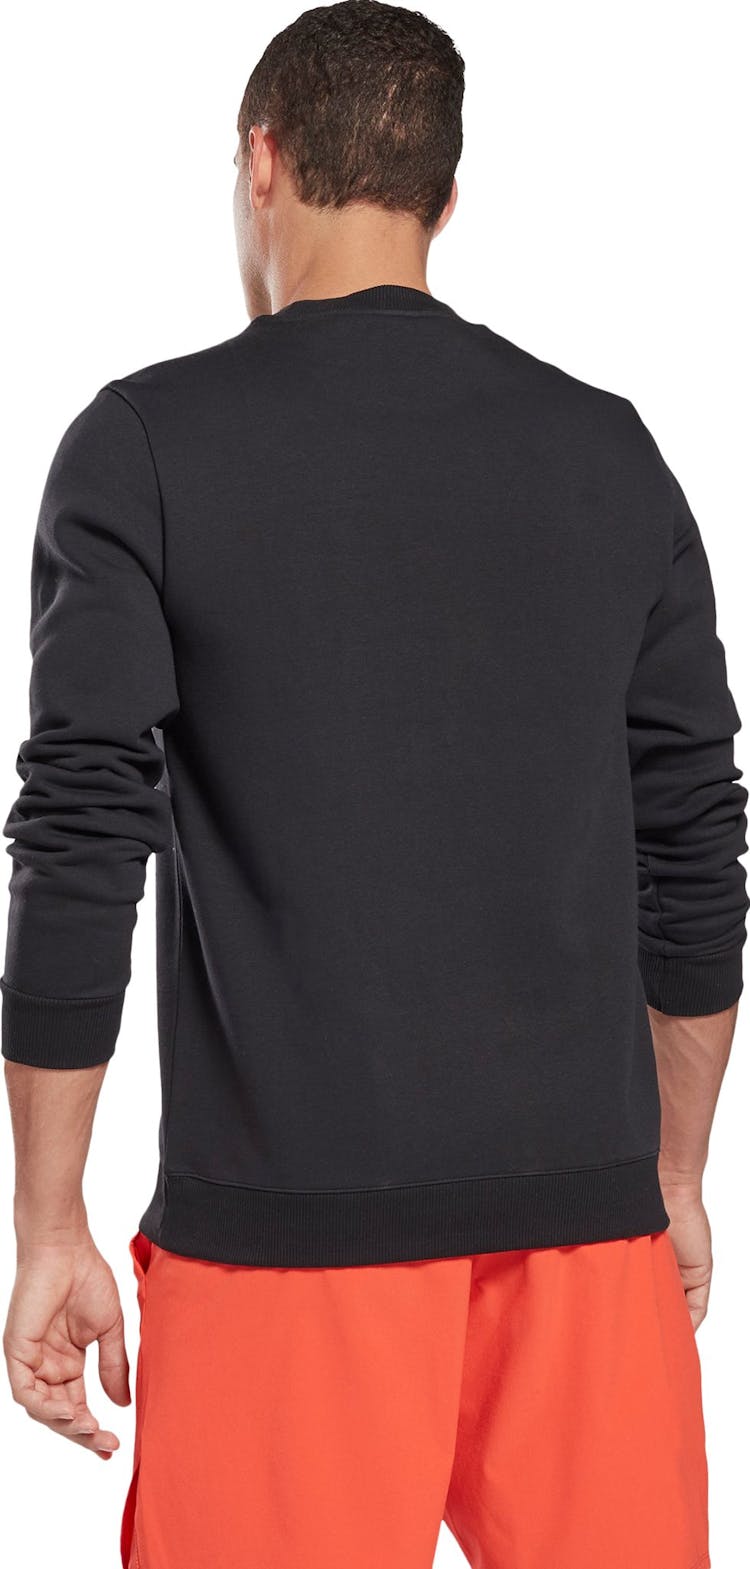 Product gallery image number 4 for product Identity Fleece Crew Neck Sweatshirt - Men's